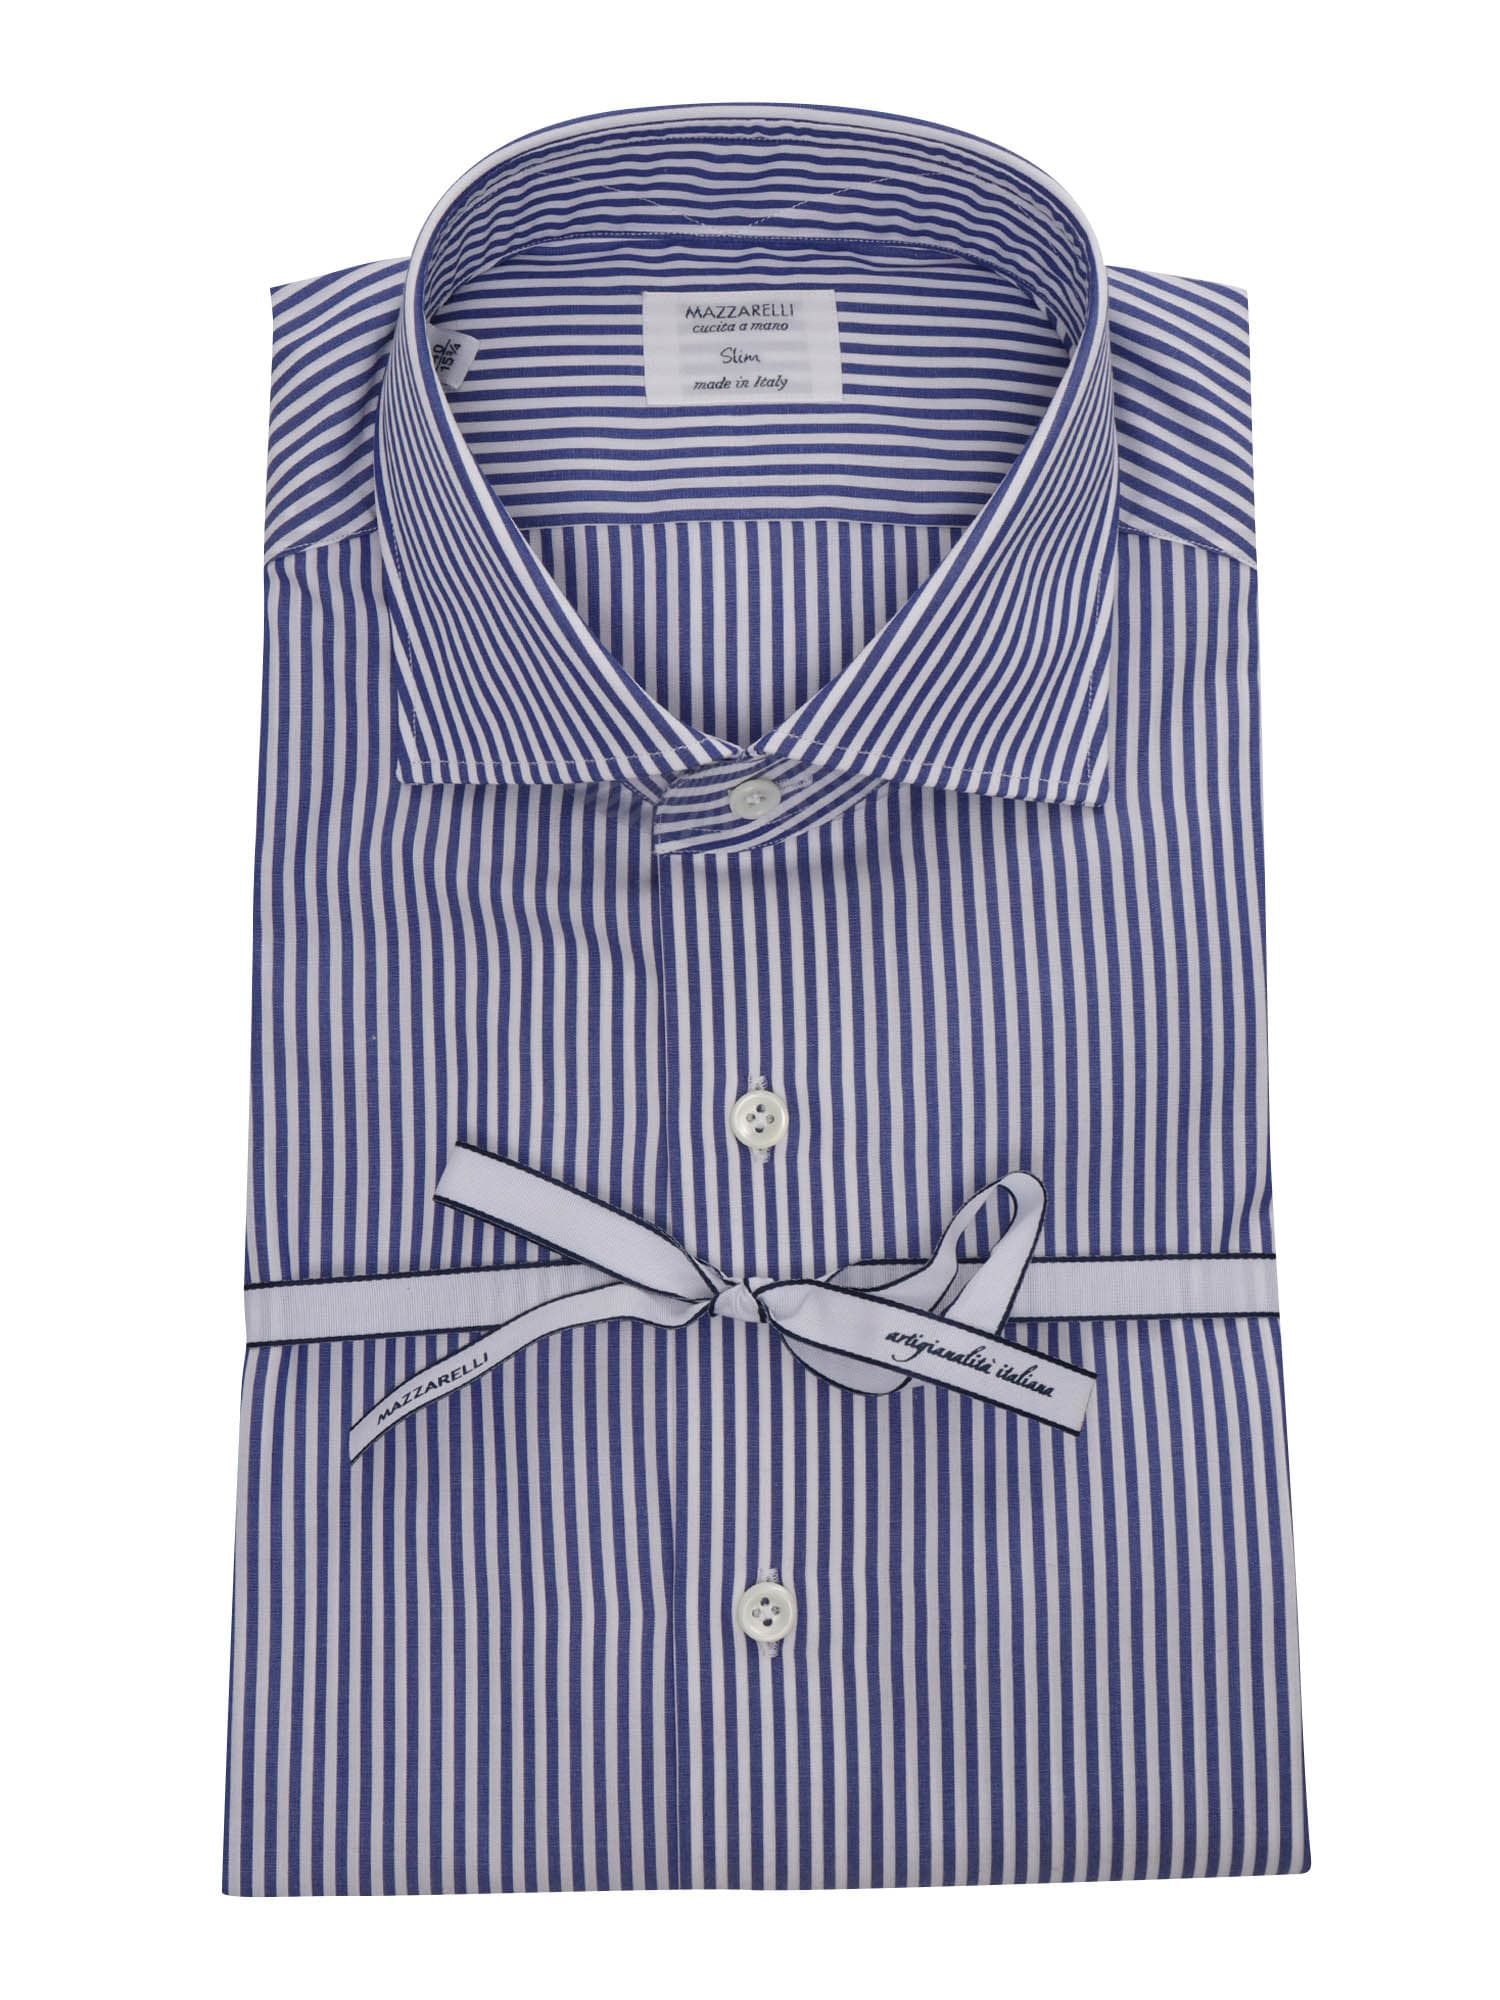 Shop Mazzarelli Blue Striped Shirt In White